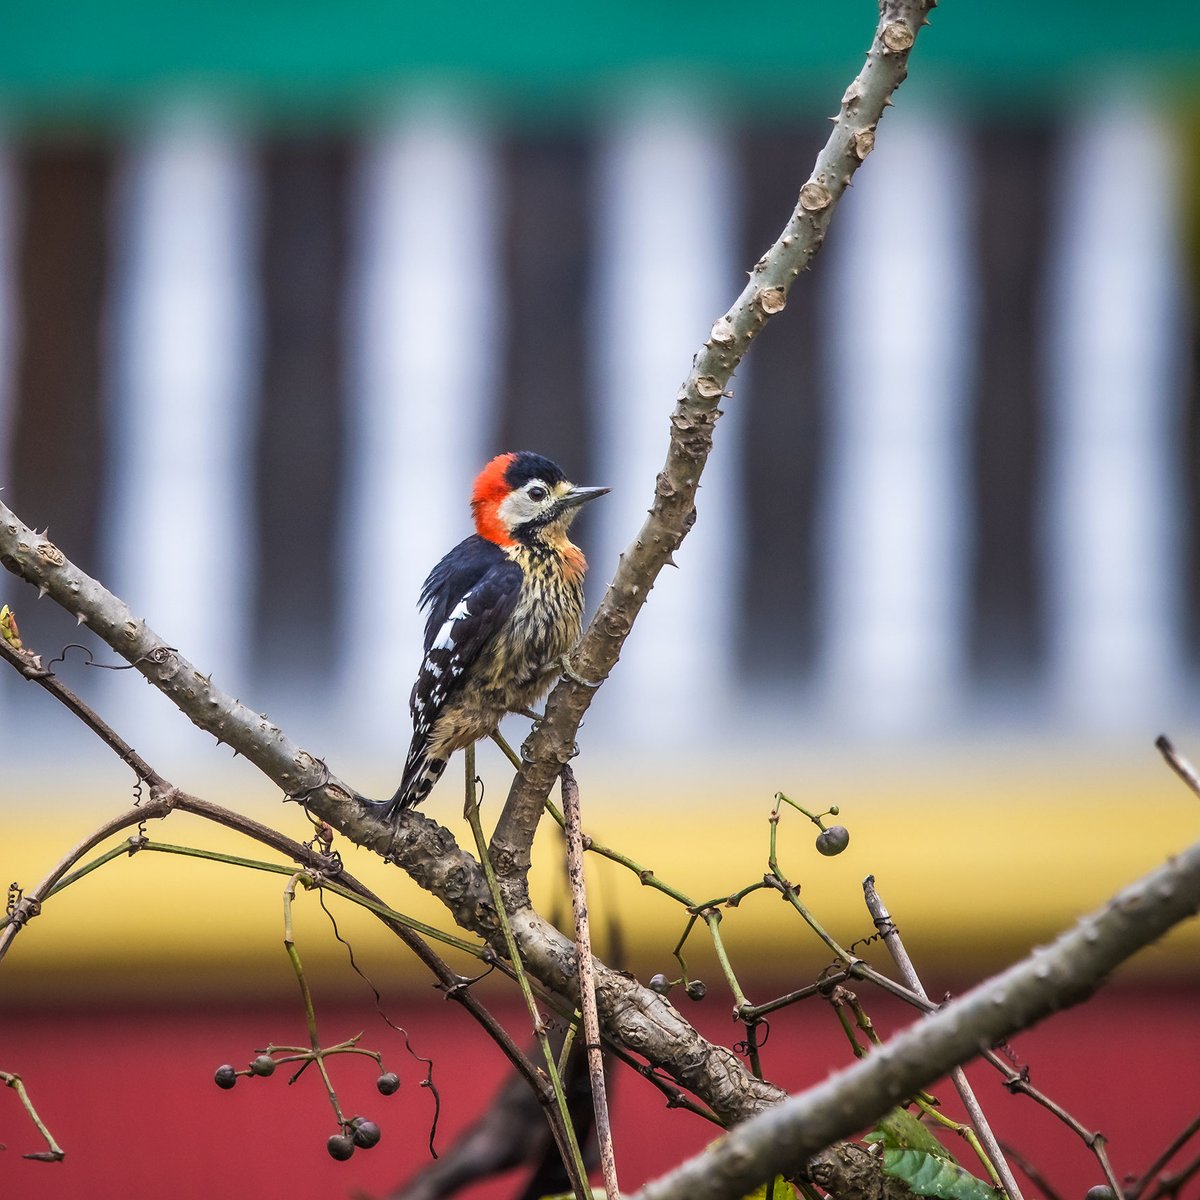 Crimson-breasted Woodpecker! 
.
#pwhsikkim #sikkim #animalsmood #kings_birds #birdwatching #bestbirdshots #animalsaddict #birding #your_best_birds #wildlife_seekers #animallovers #animales #exclusive_animals #wildlifephotography #animalworld #awesomeglobe